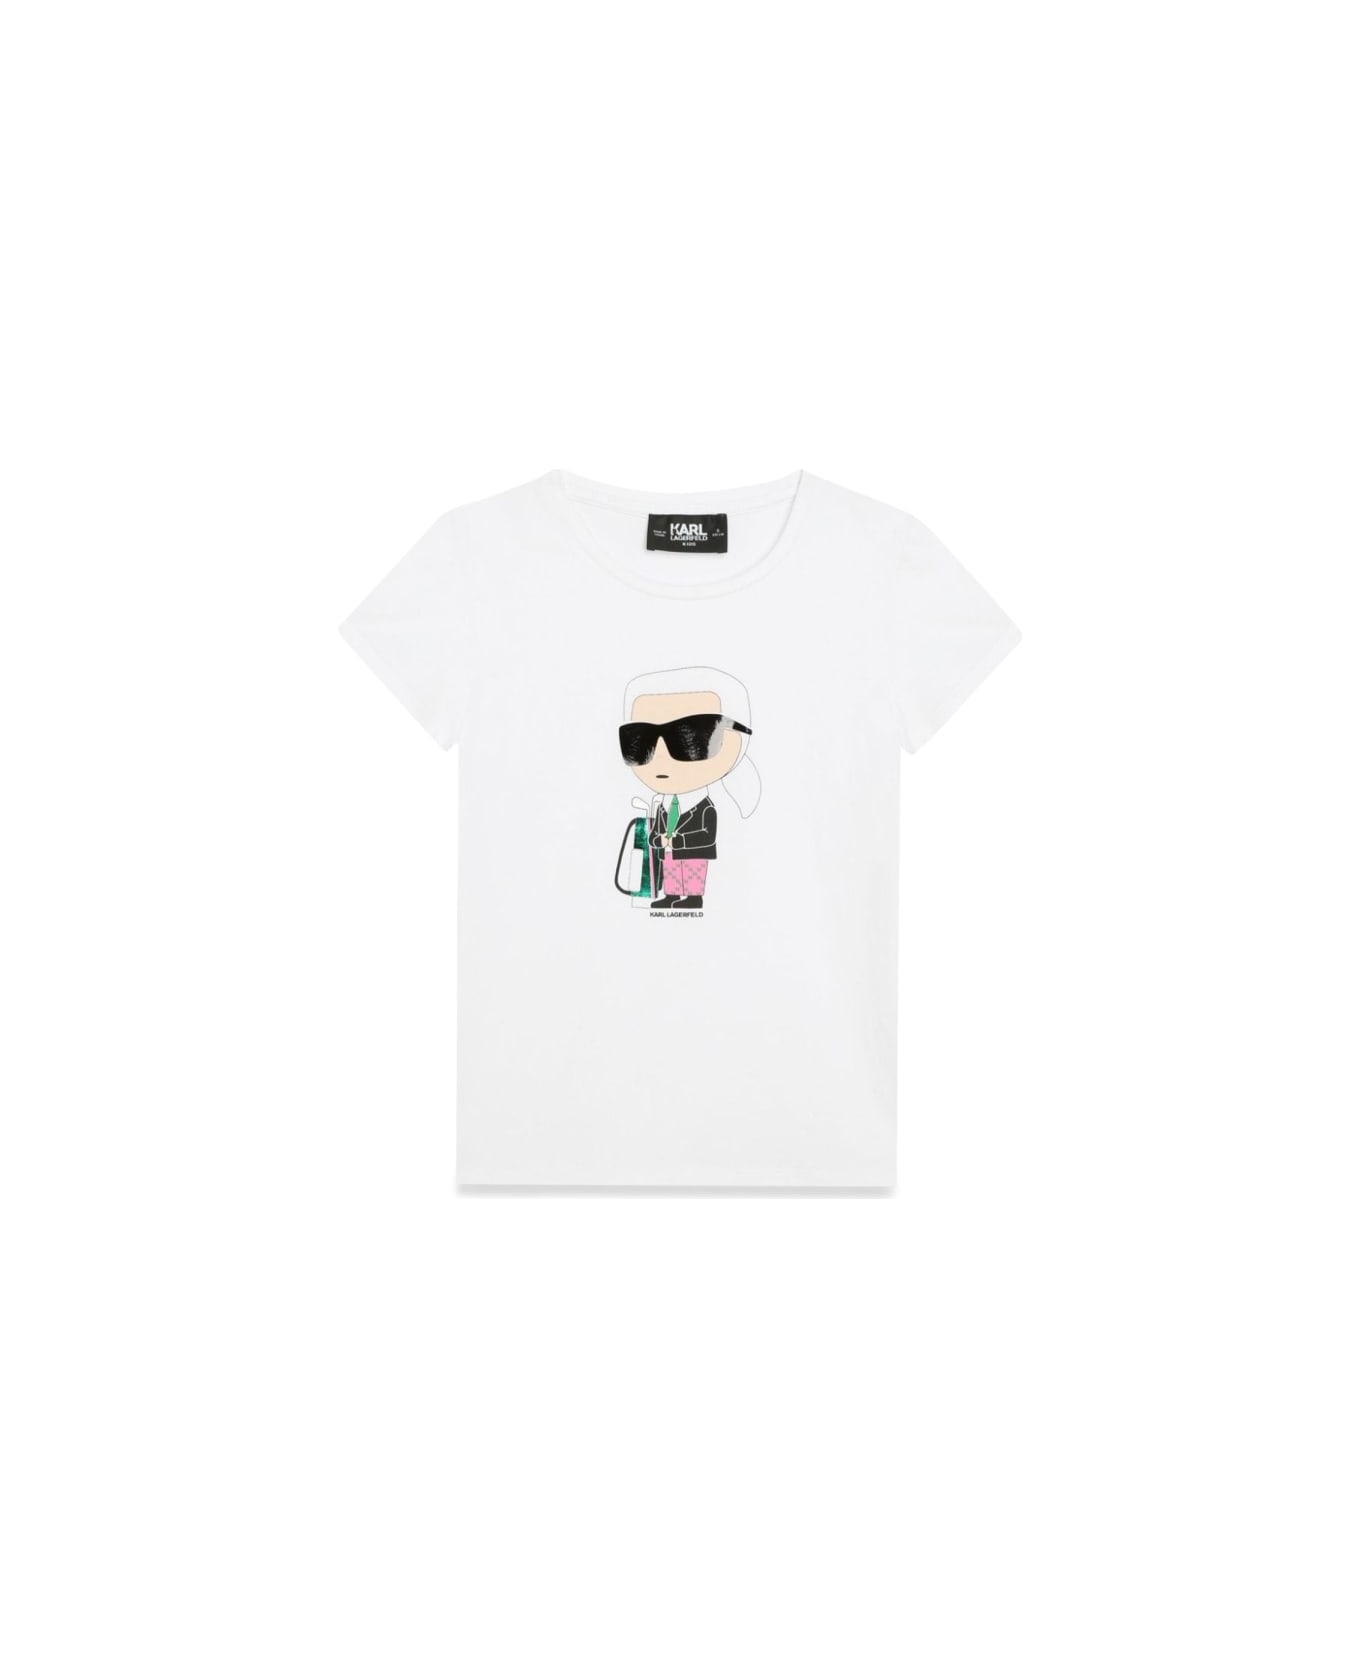 Karl Lagerfeld Tee Shirt - WHITE